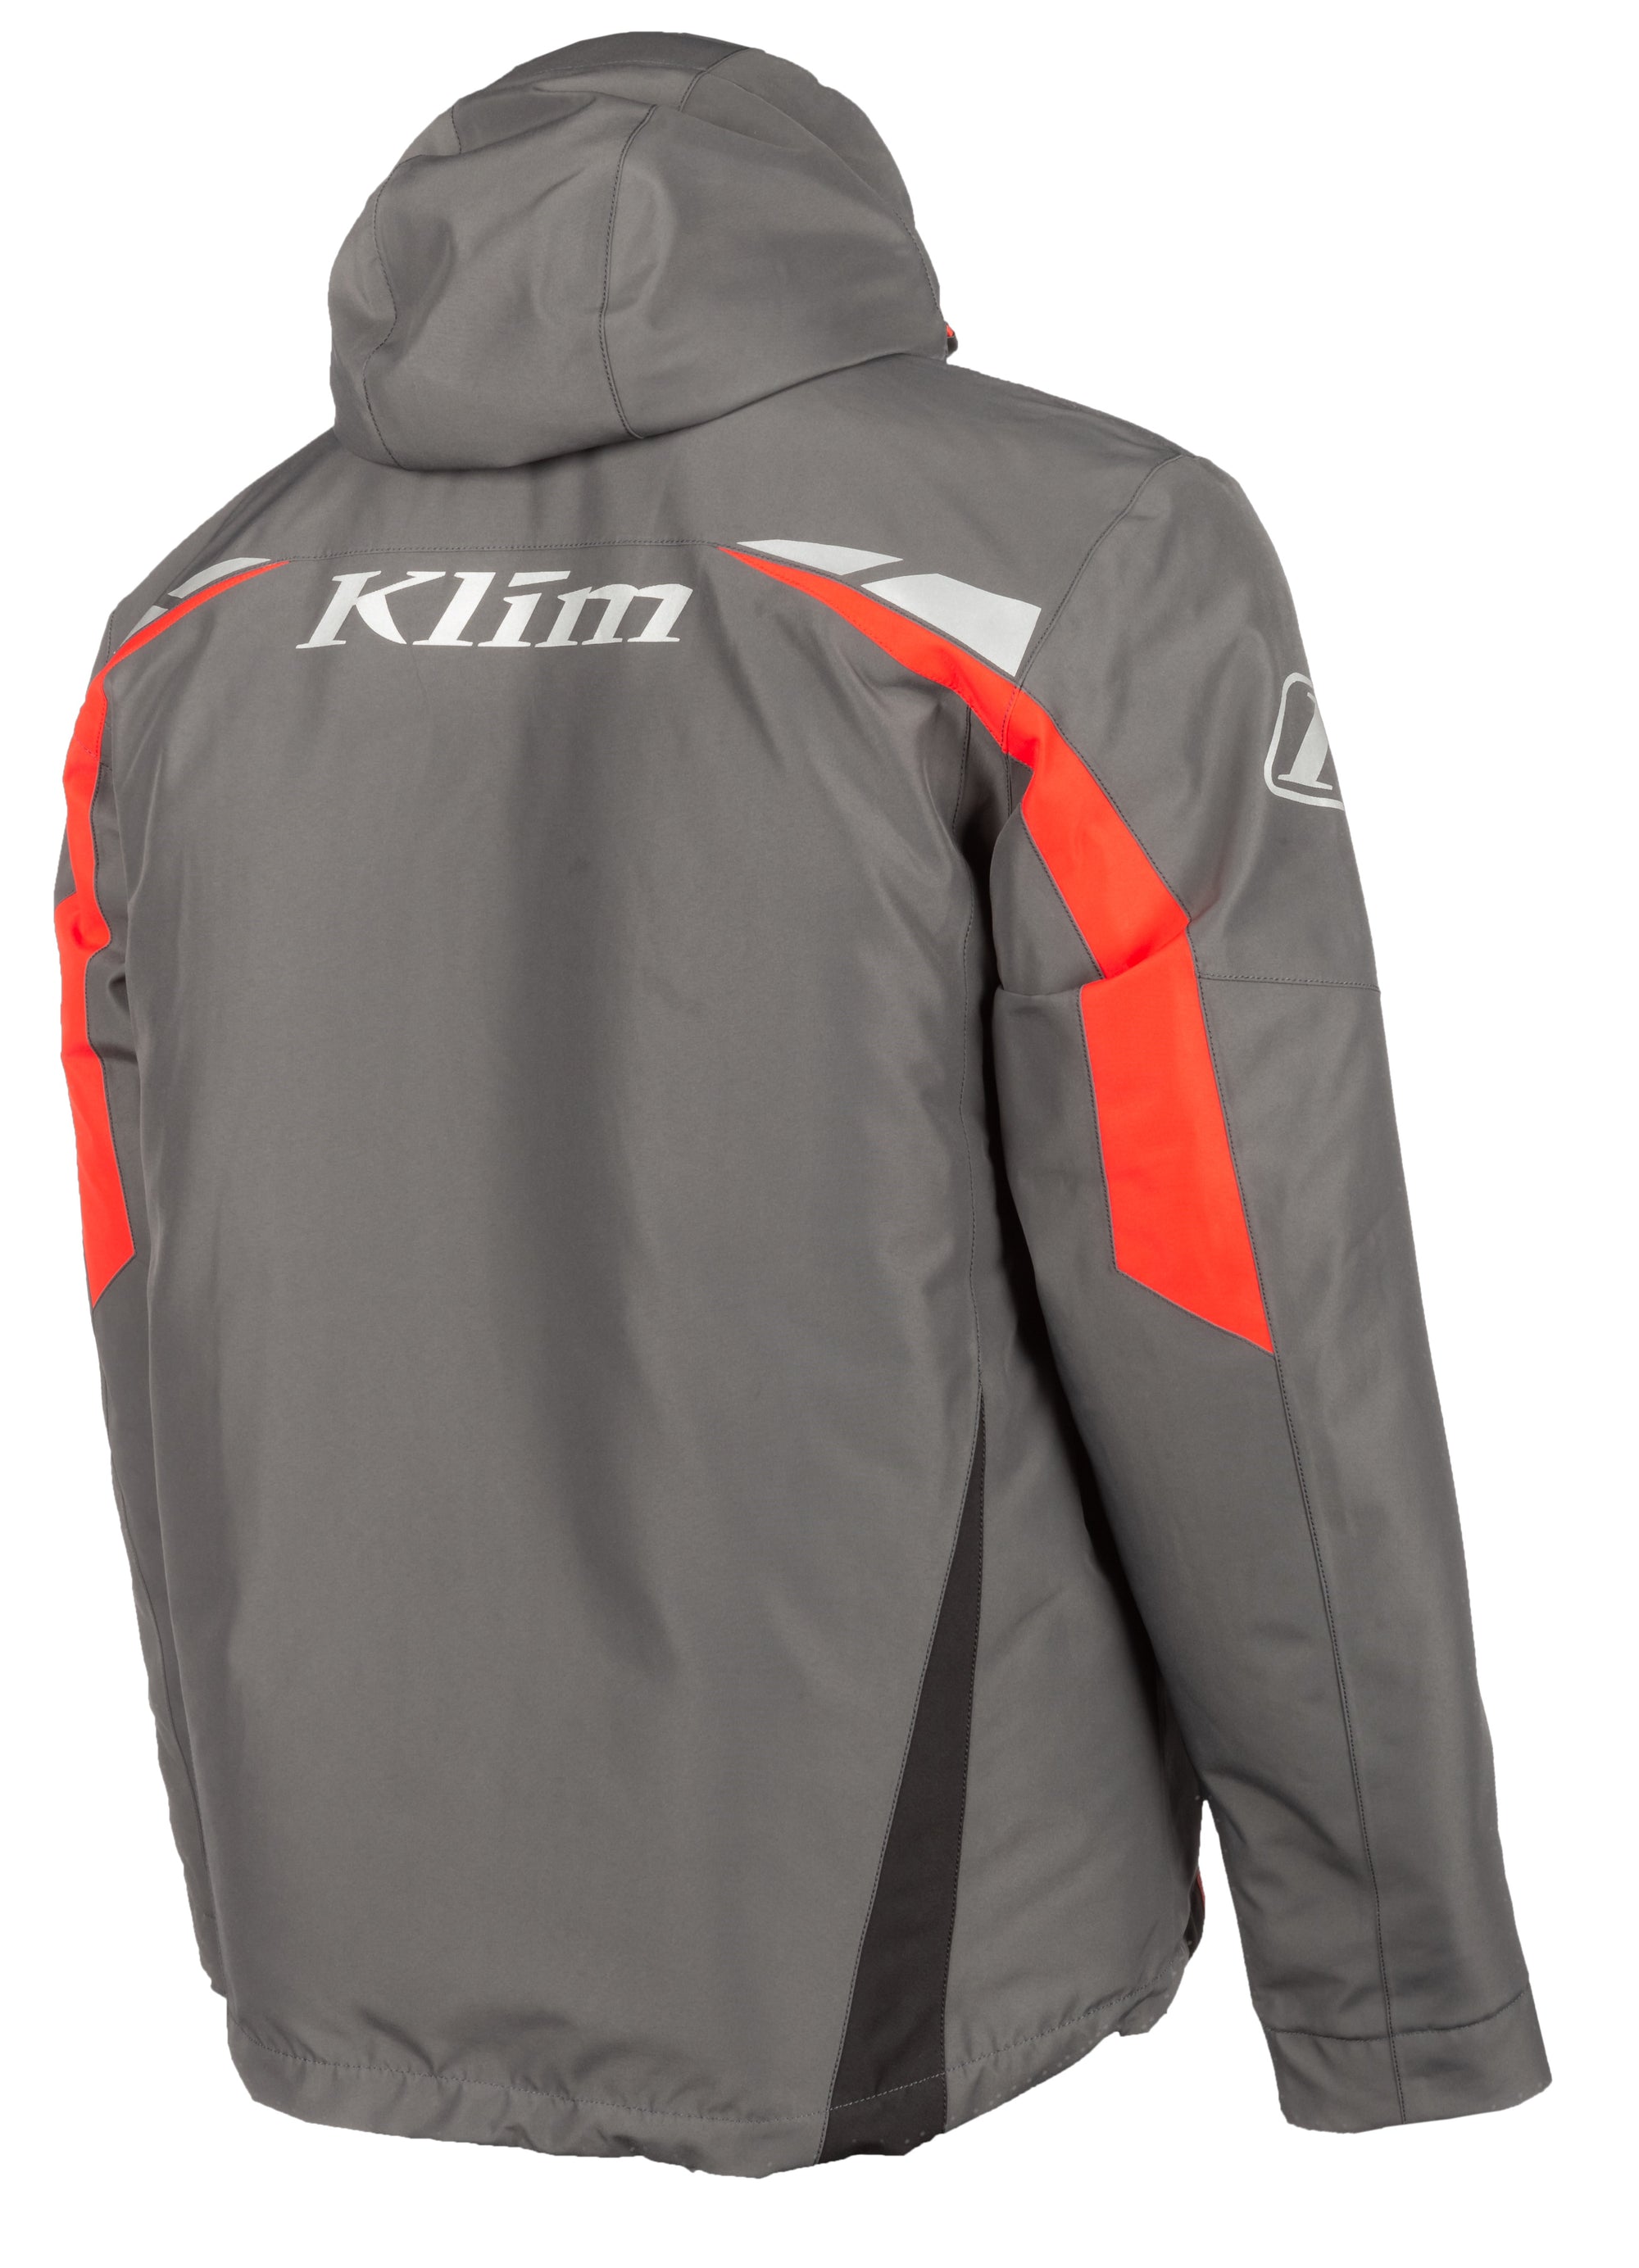 KLIM Rift Jacket - 3162-000 - The Parts Lodge